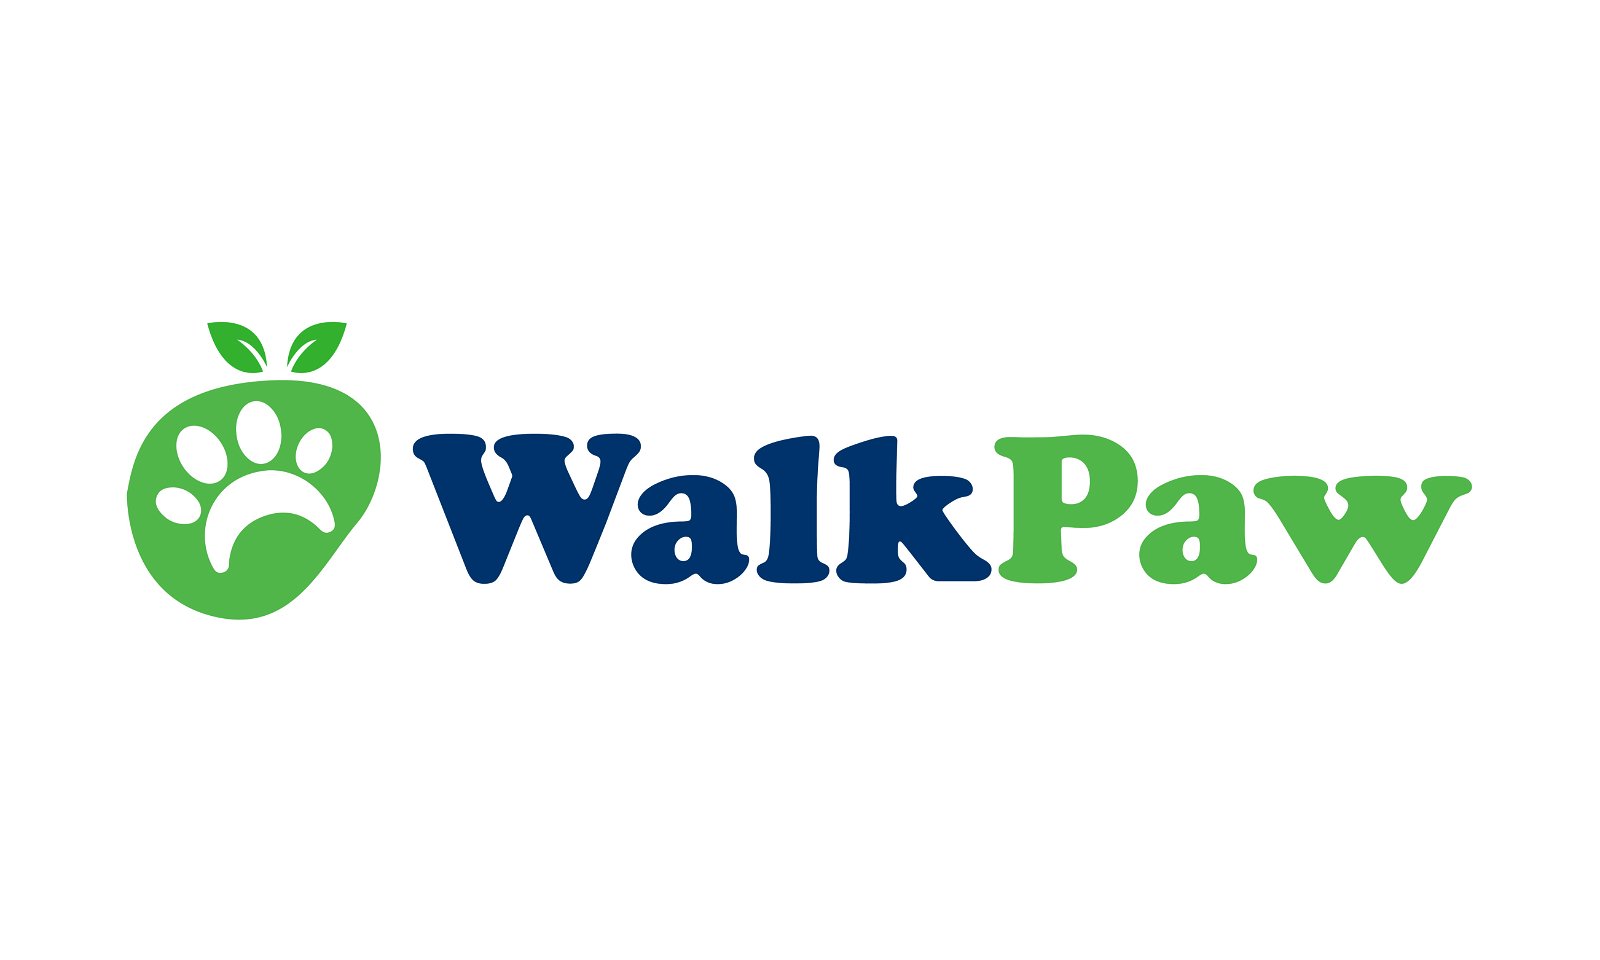 WalkPaw.com - Creative brandable domain for sale